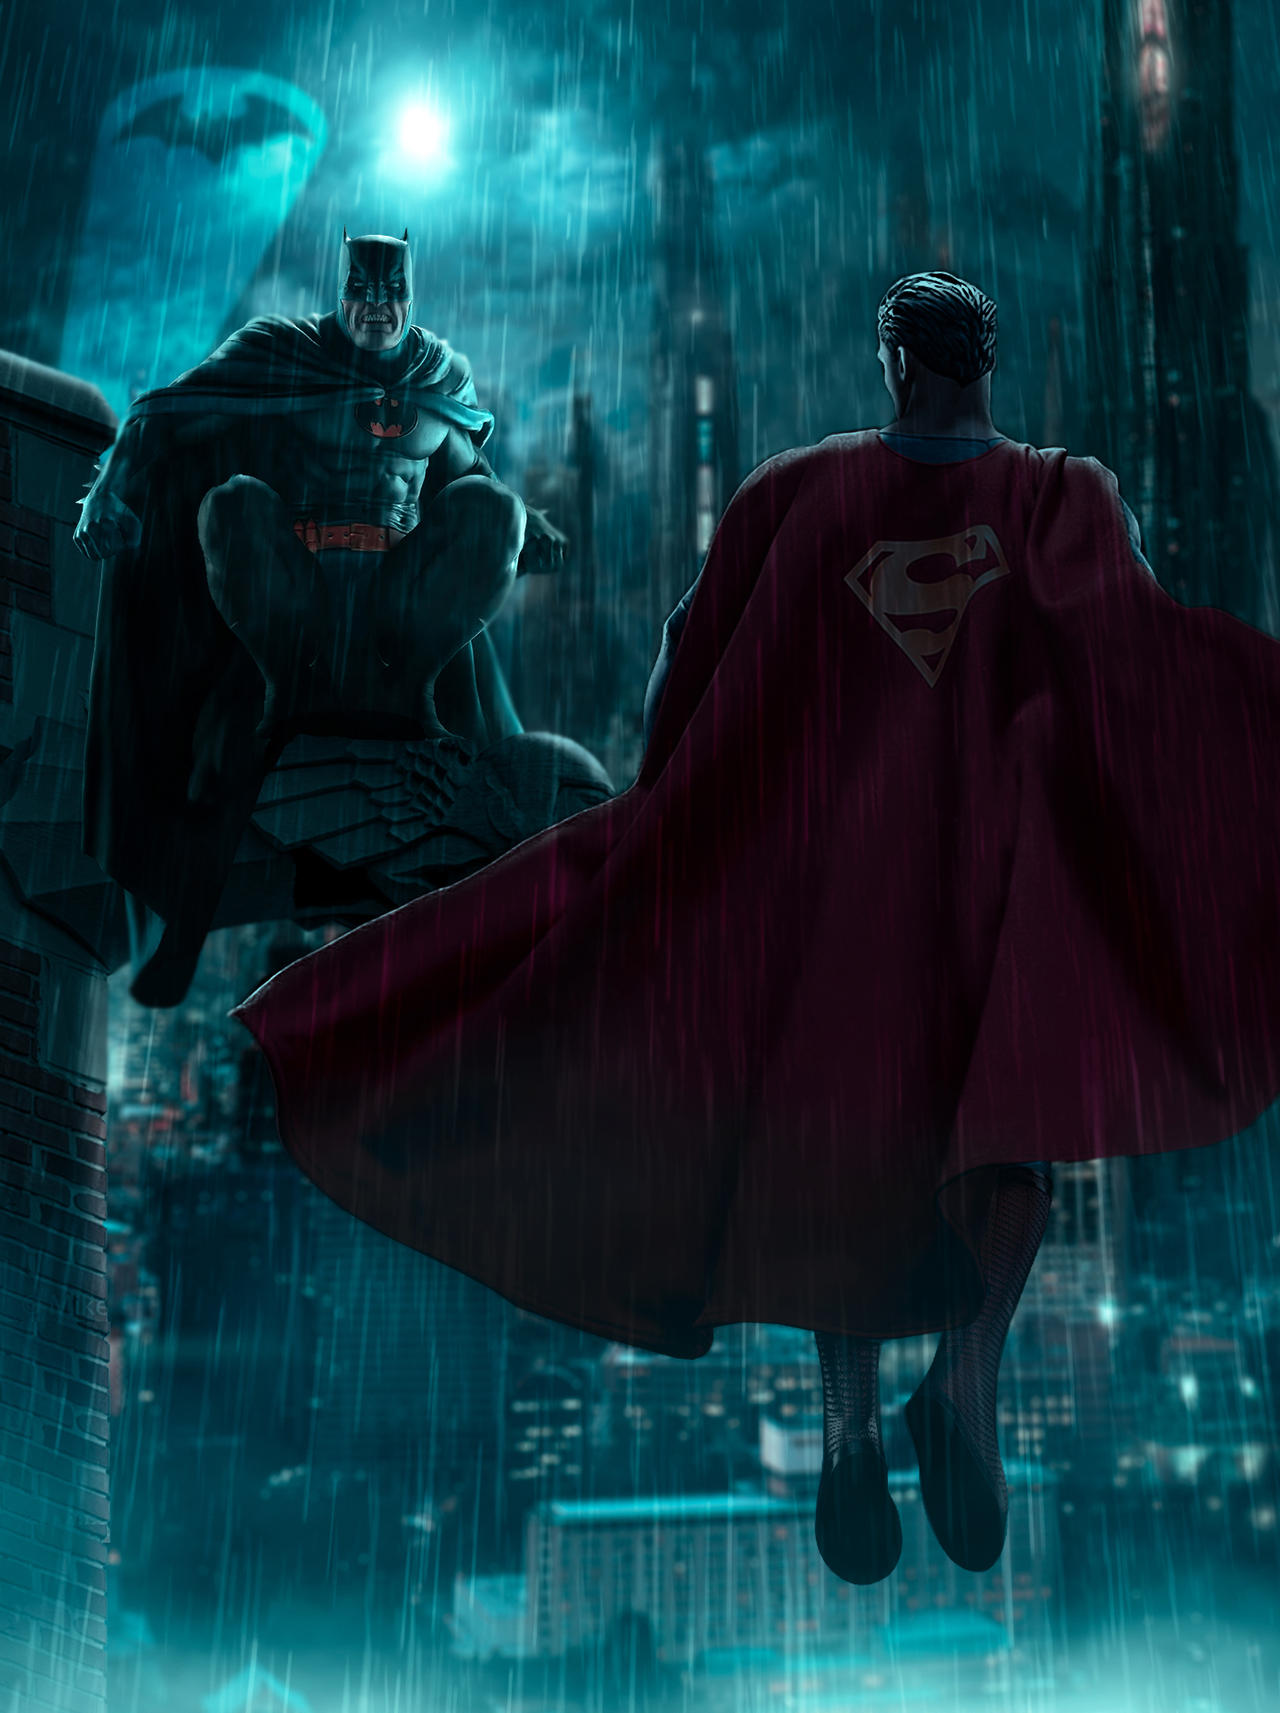 Batman vs Superman by HarbingerDesigns on DeviantArt